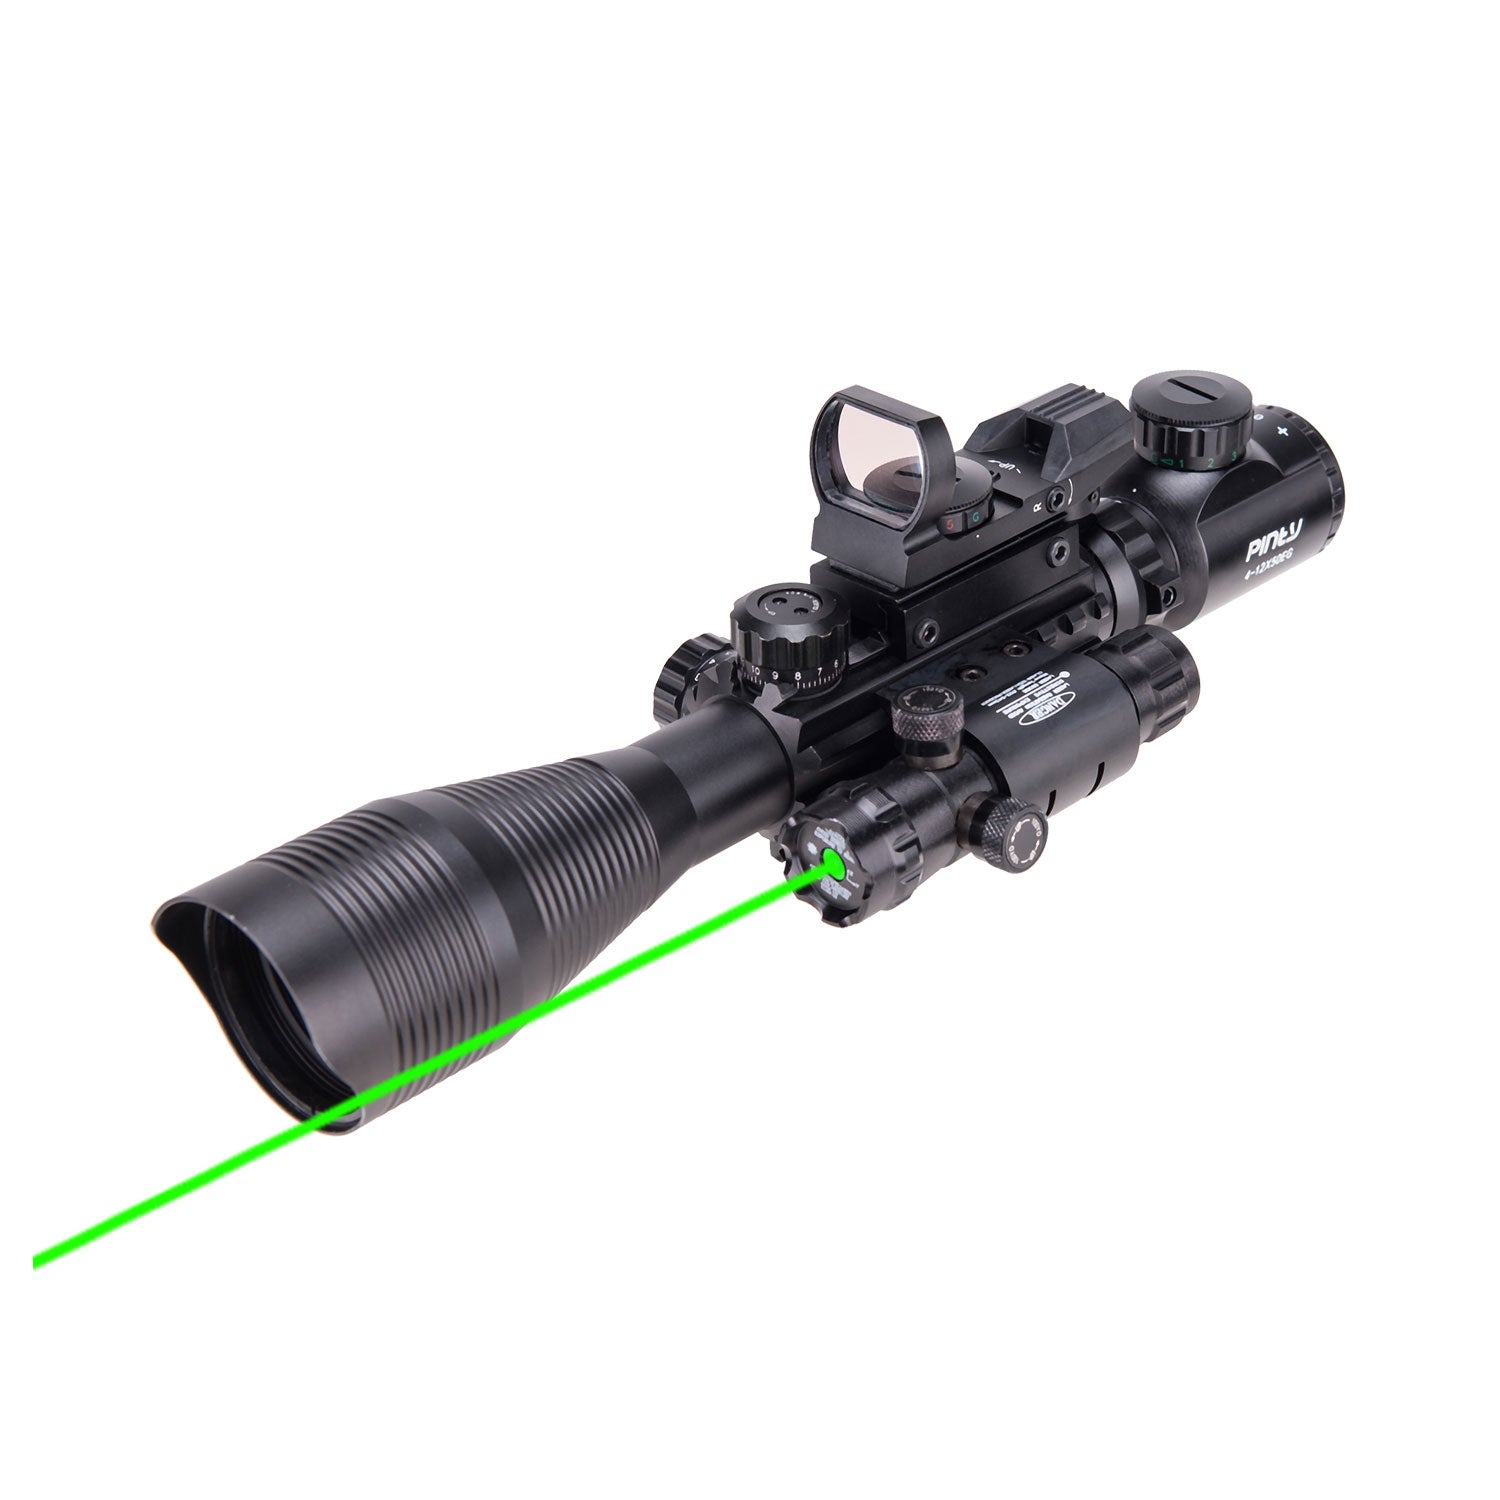 3-in-1 Rifle Scope Combo, 4-12x50mm Rangefinder Scope, Red&Green Reflex Sight, Green Laser